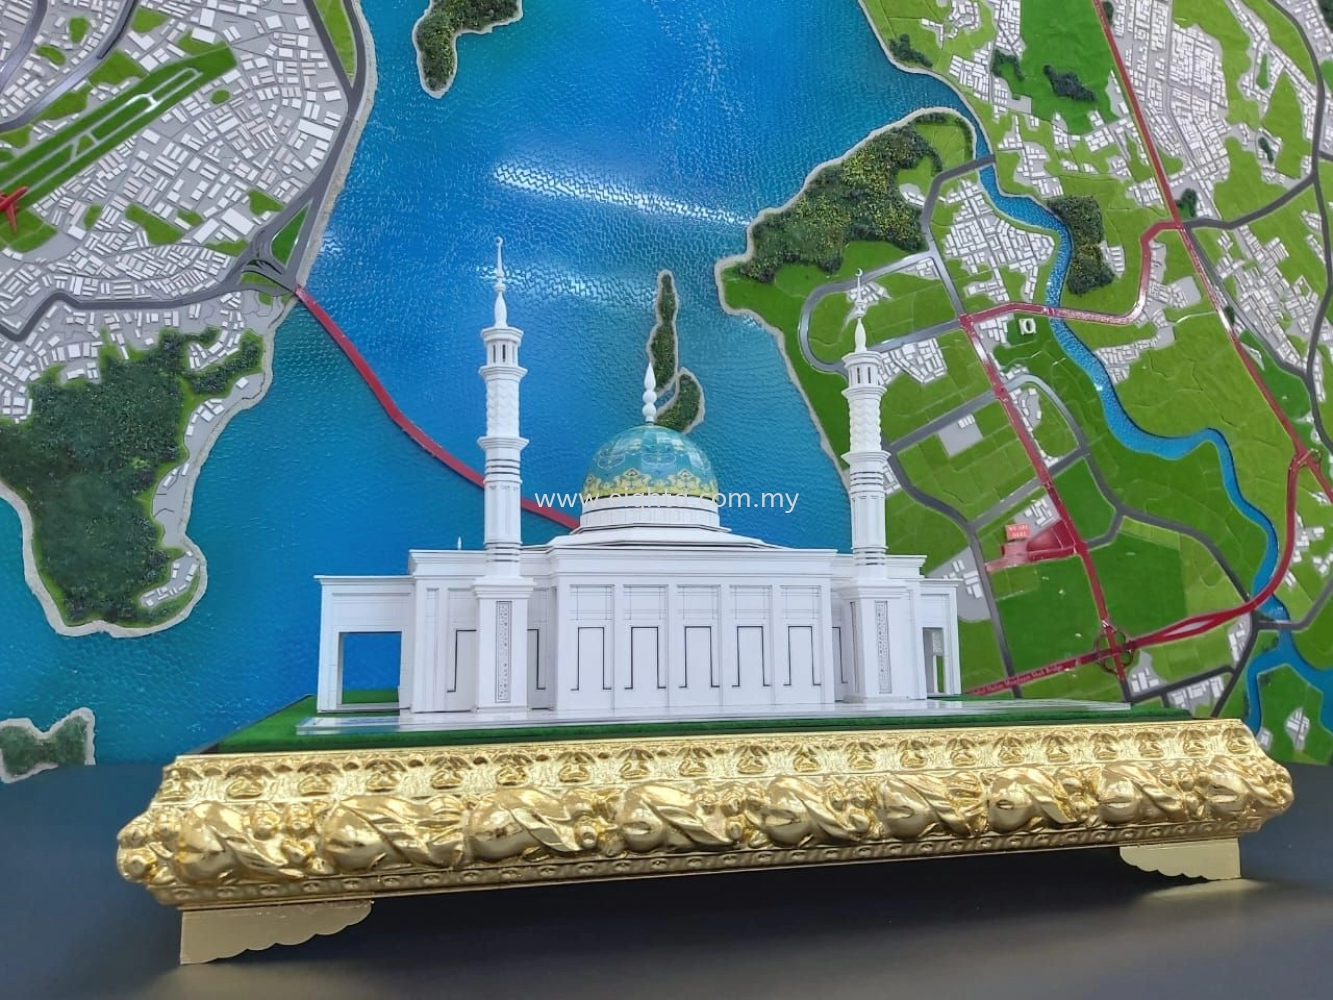 Perasmian Masjid Albukhary - 3D Professional Model Making Design